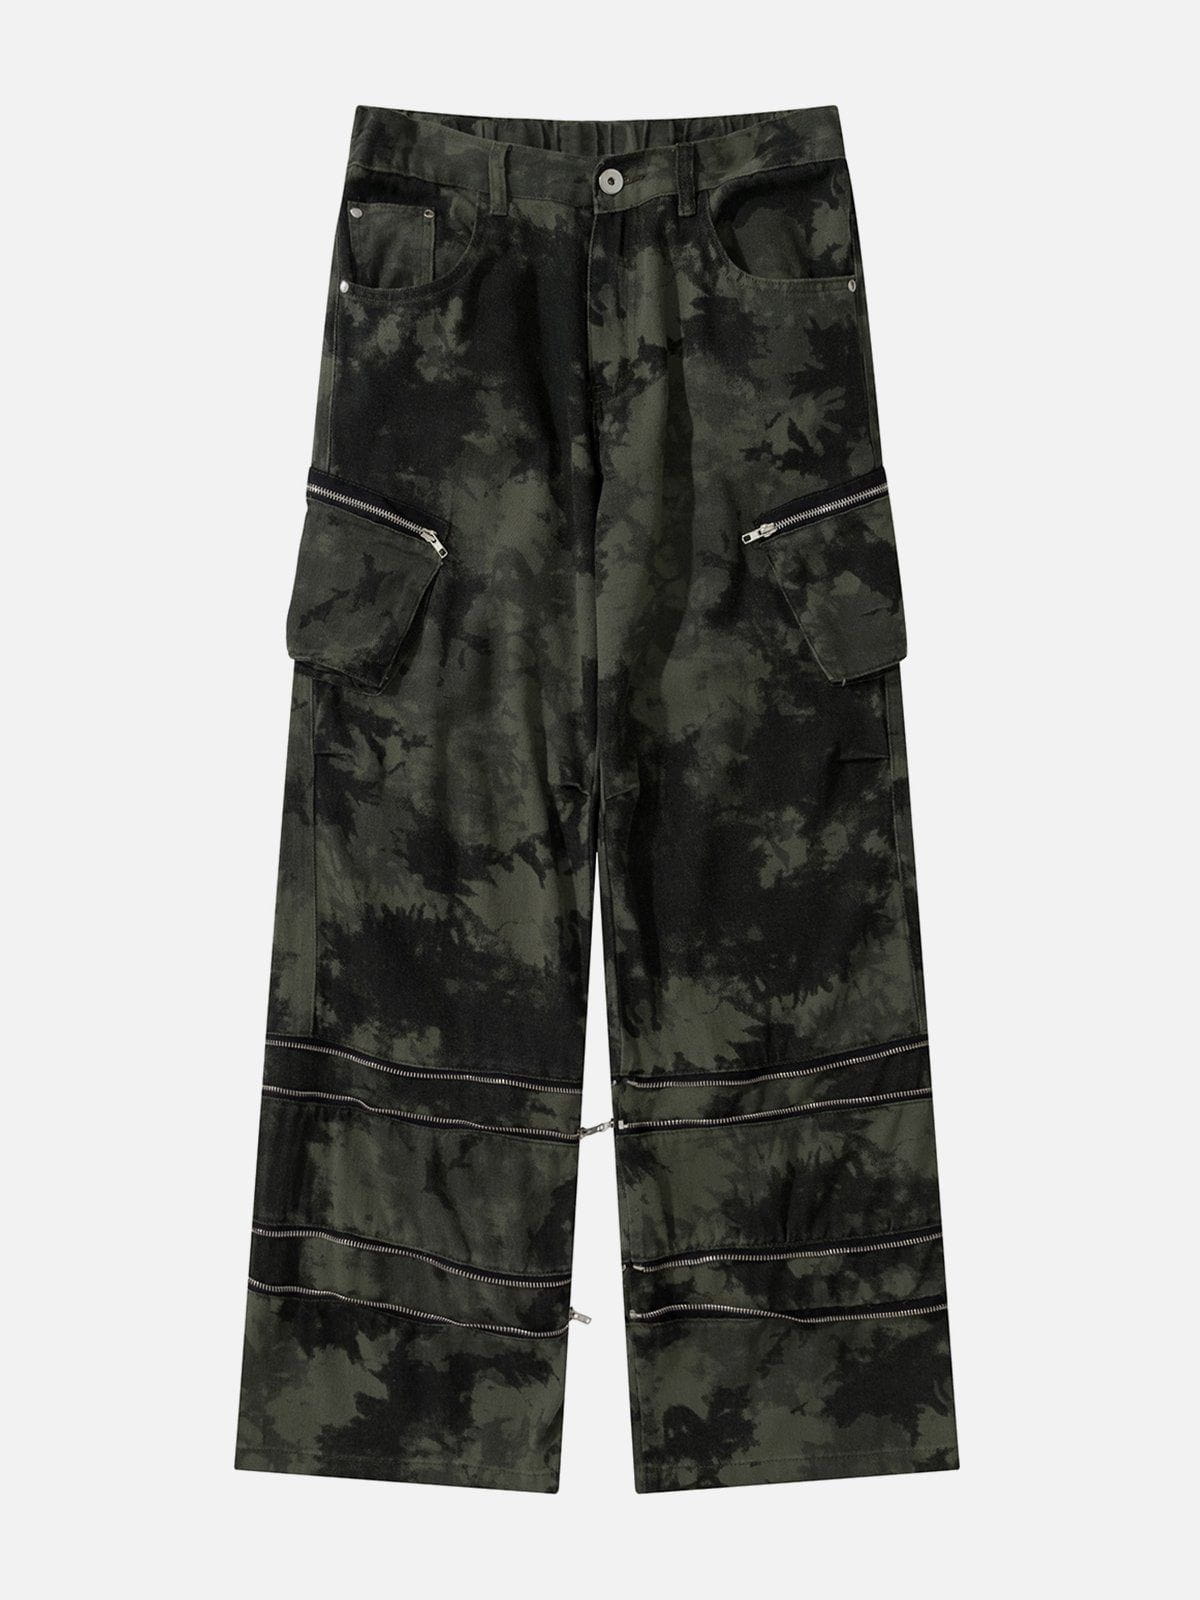 Eprezzy® - Functional Multi-pocket Zipper Design Camouflage Cargo Pants Streetwear Fashion - eprezzy.com